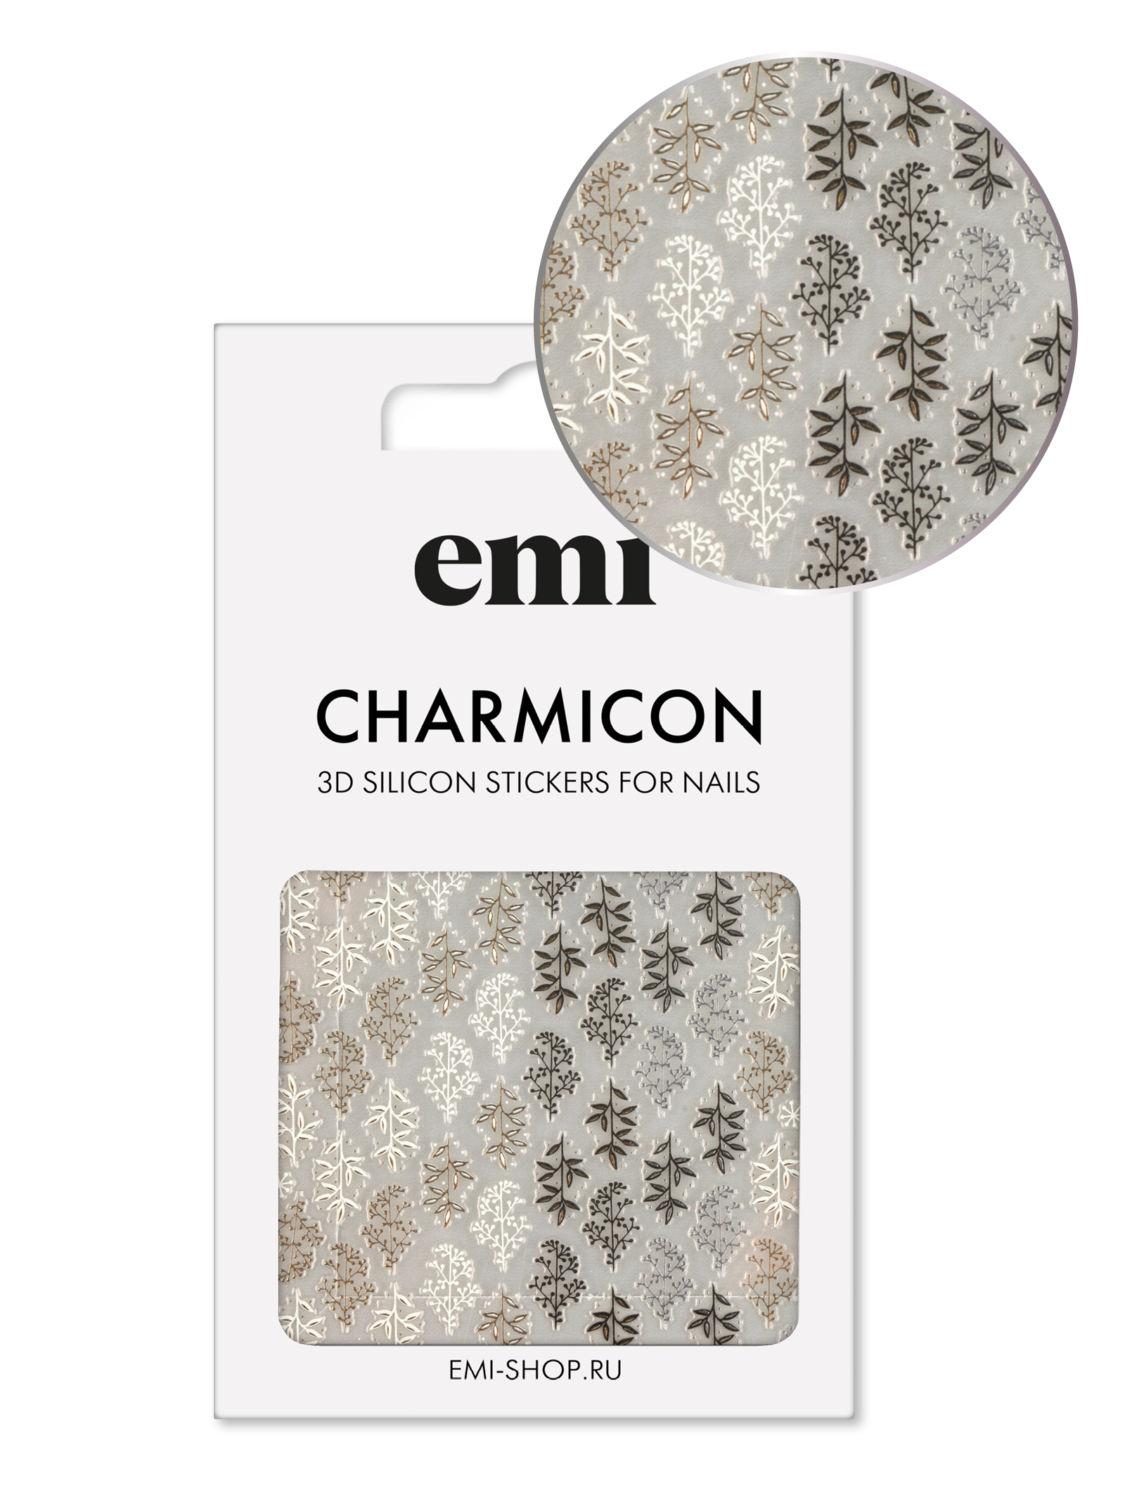 E.Mi Charmicon 3D Silicone Stickers №225 Природный паттерн